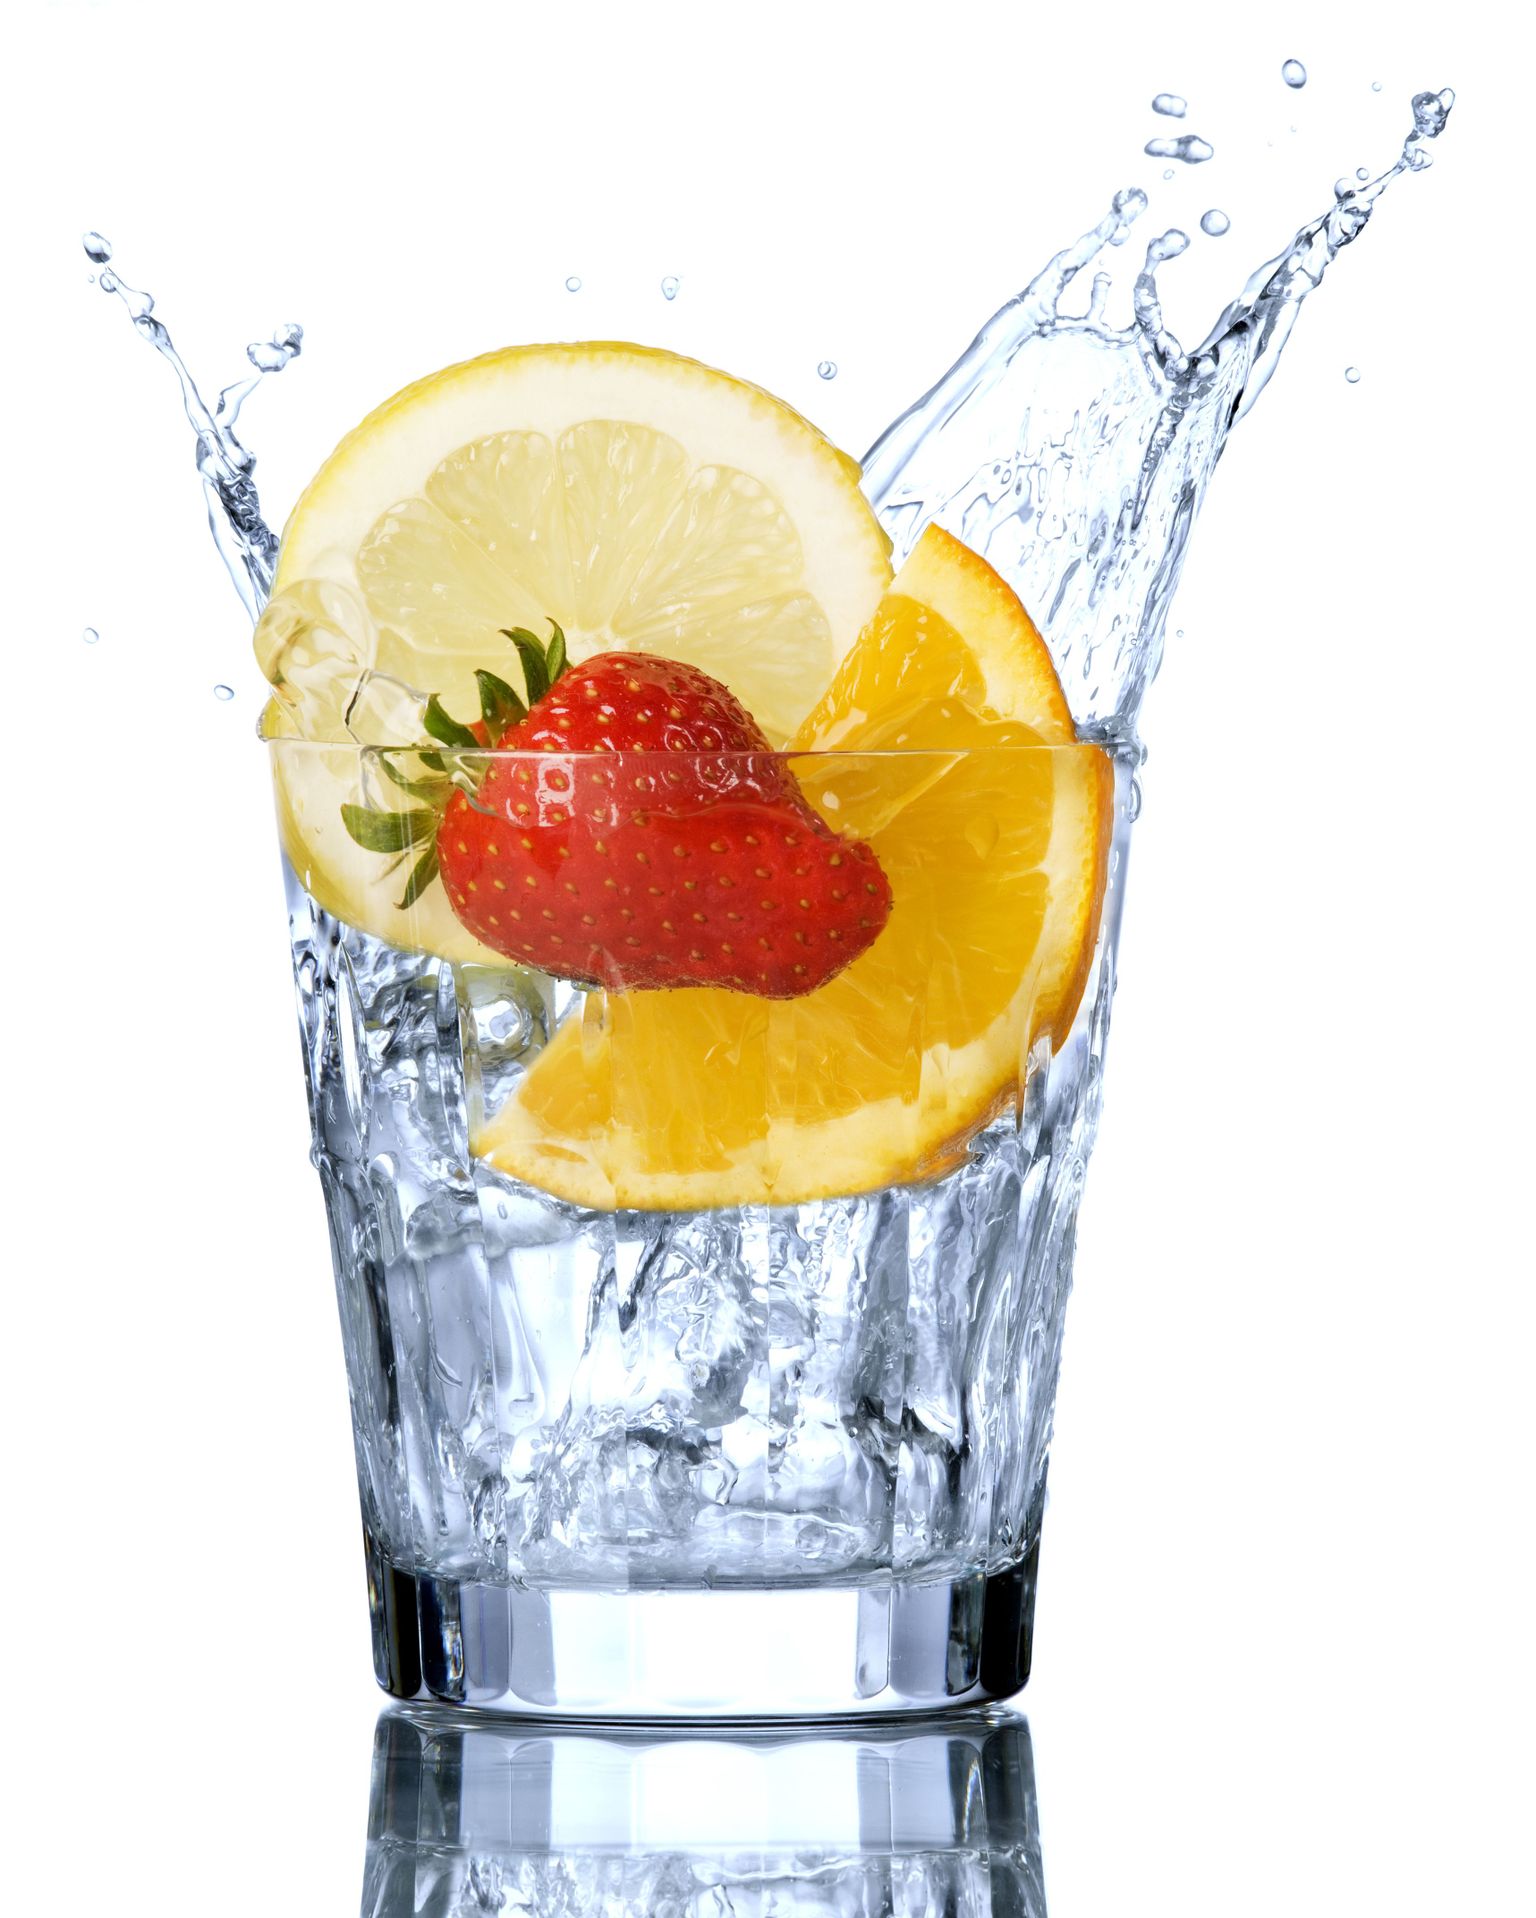 Kõige tervislikum on tarbida vett ilma alkoholita.